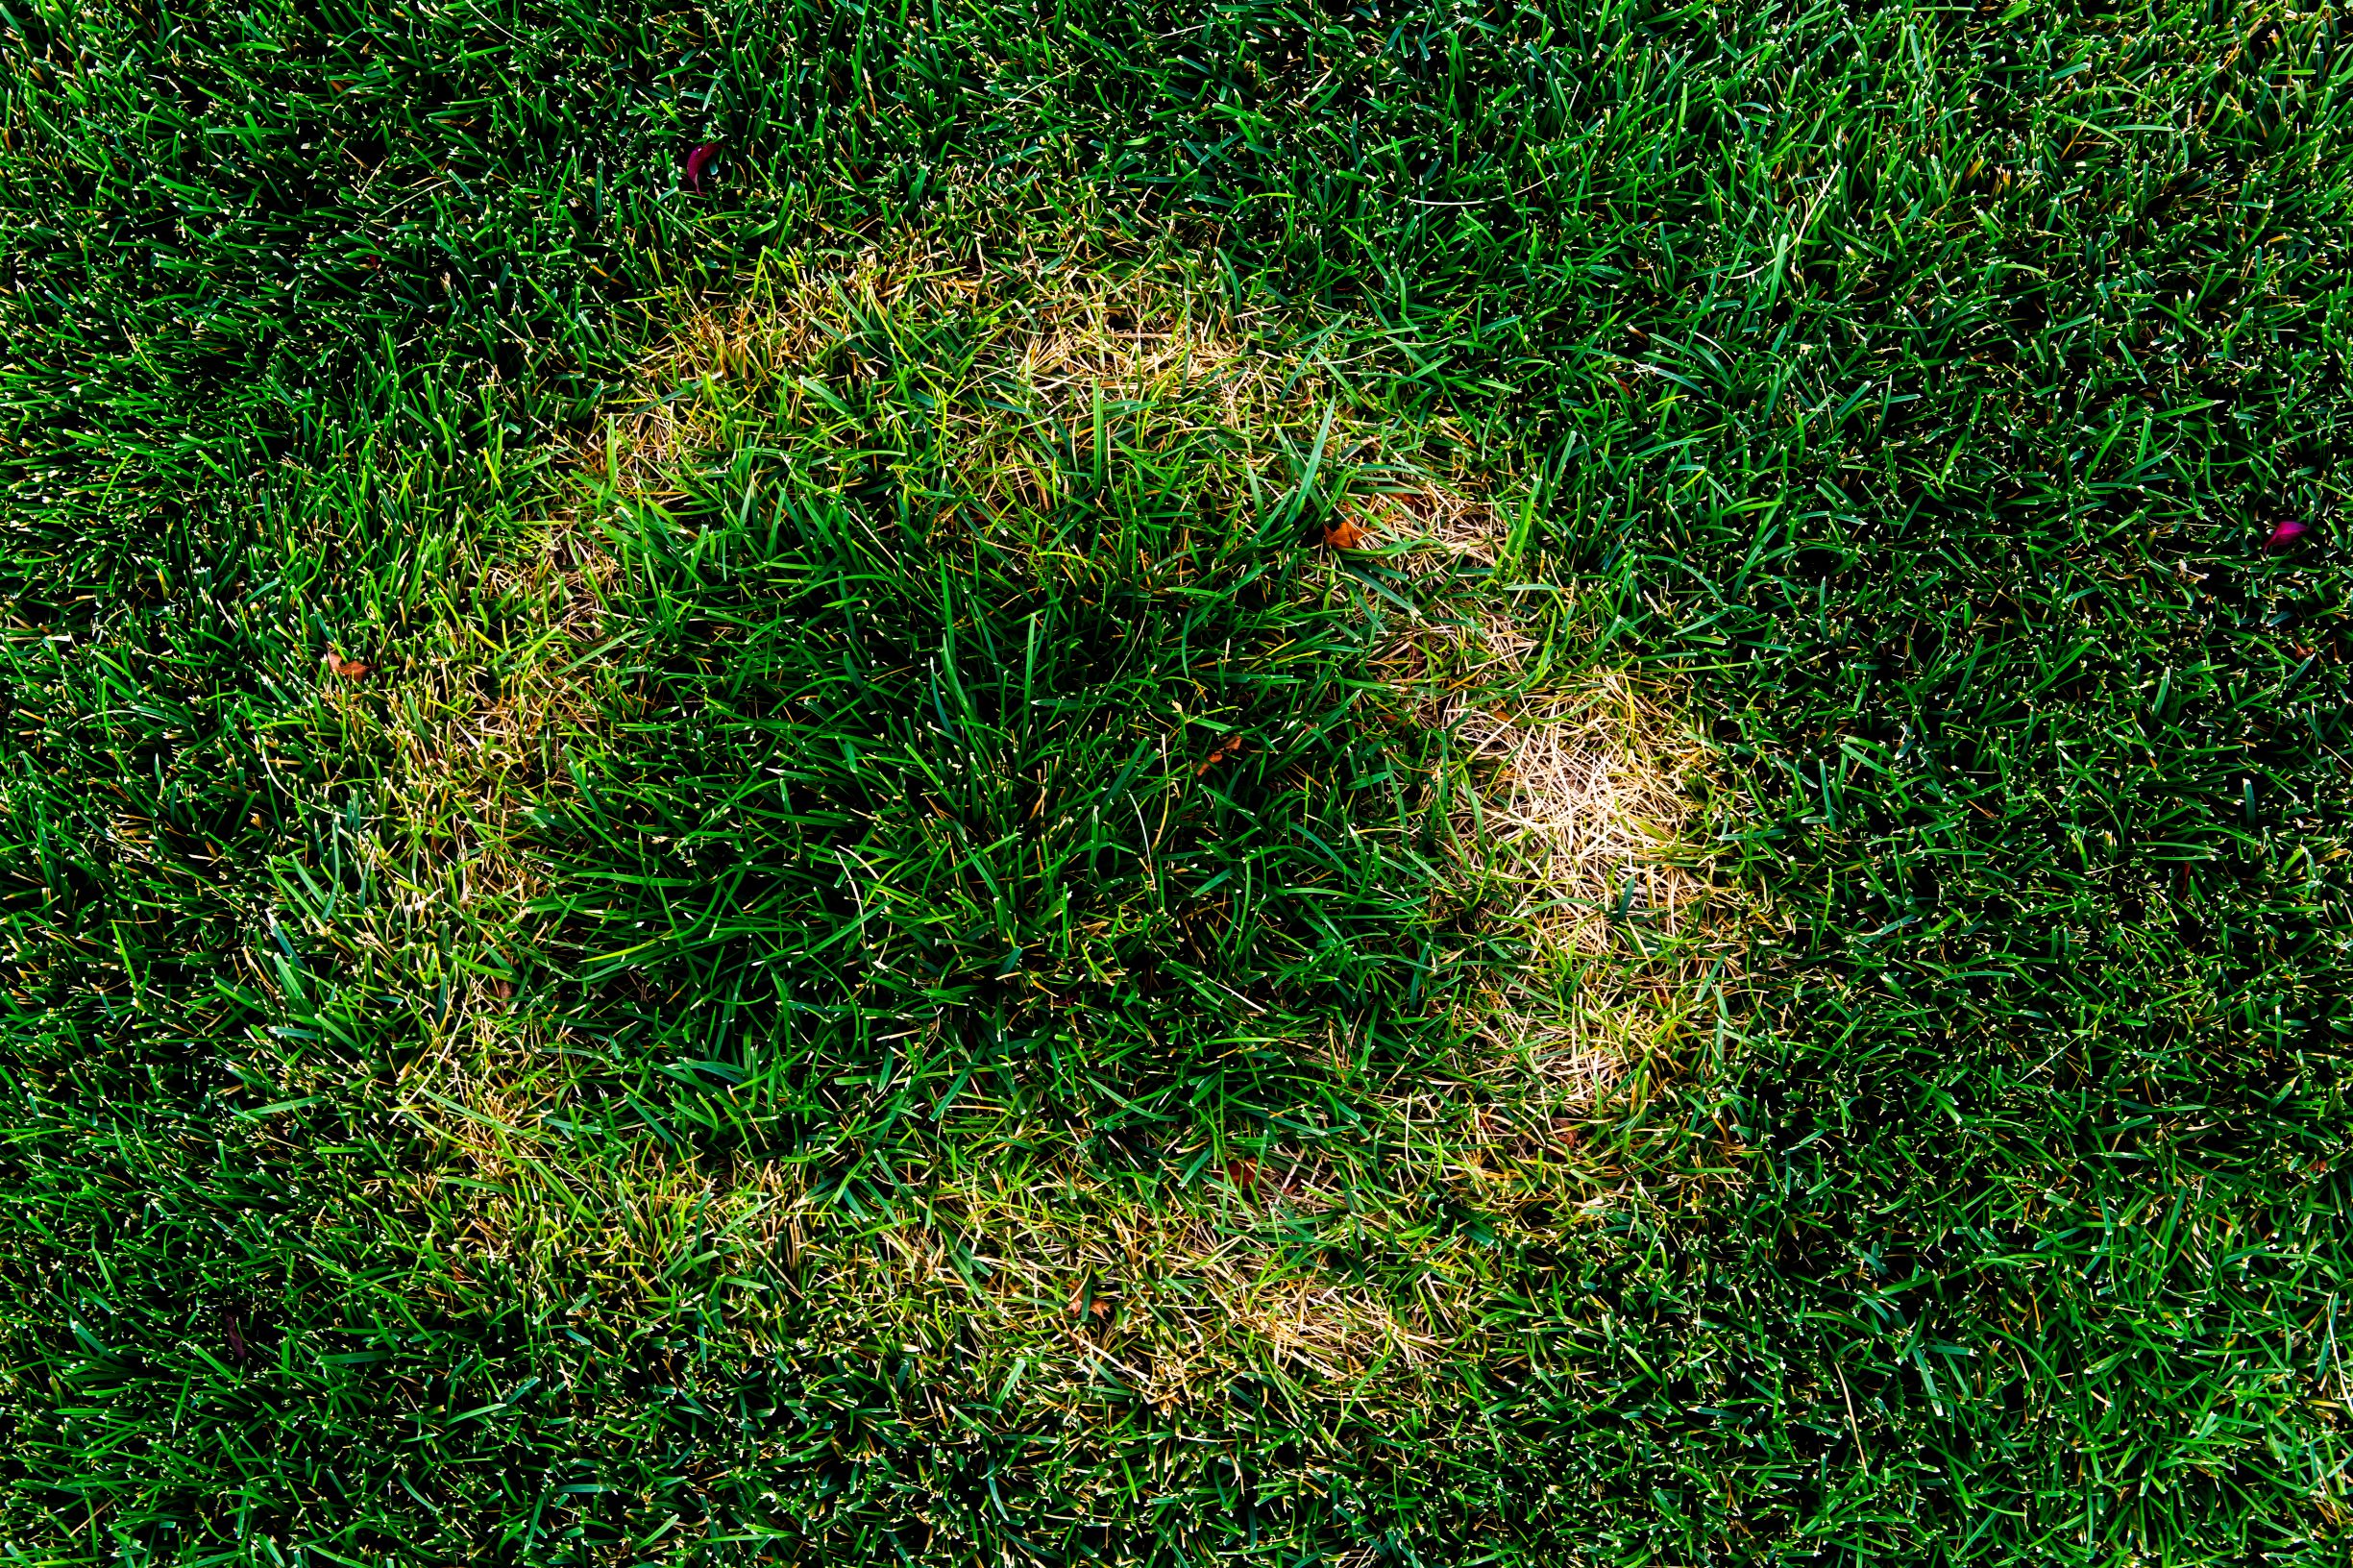 necrotic ring spot fungus in a Kentucky Bluegrass lawn